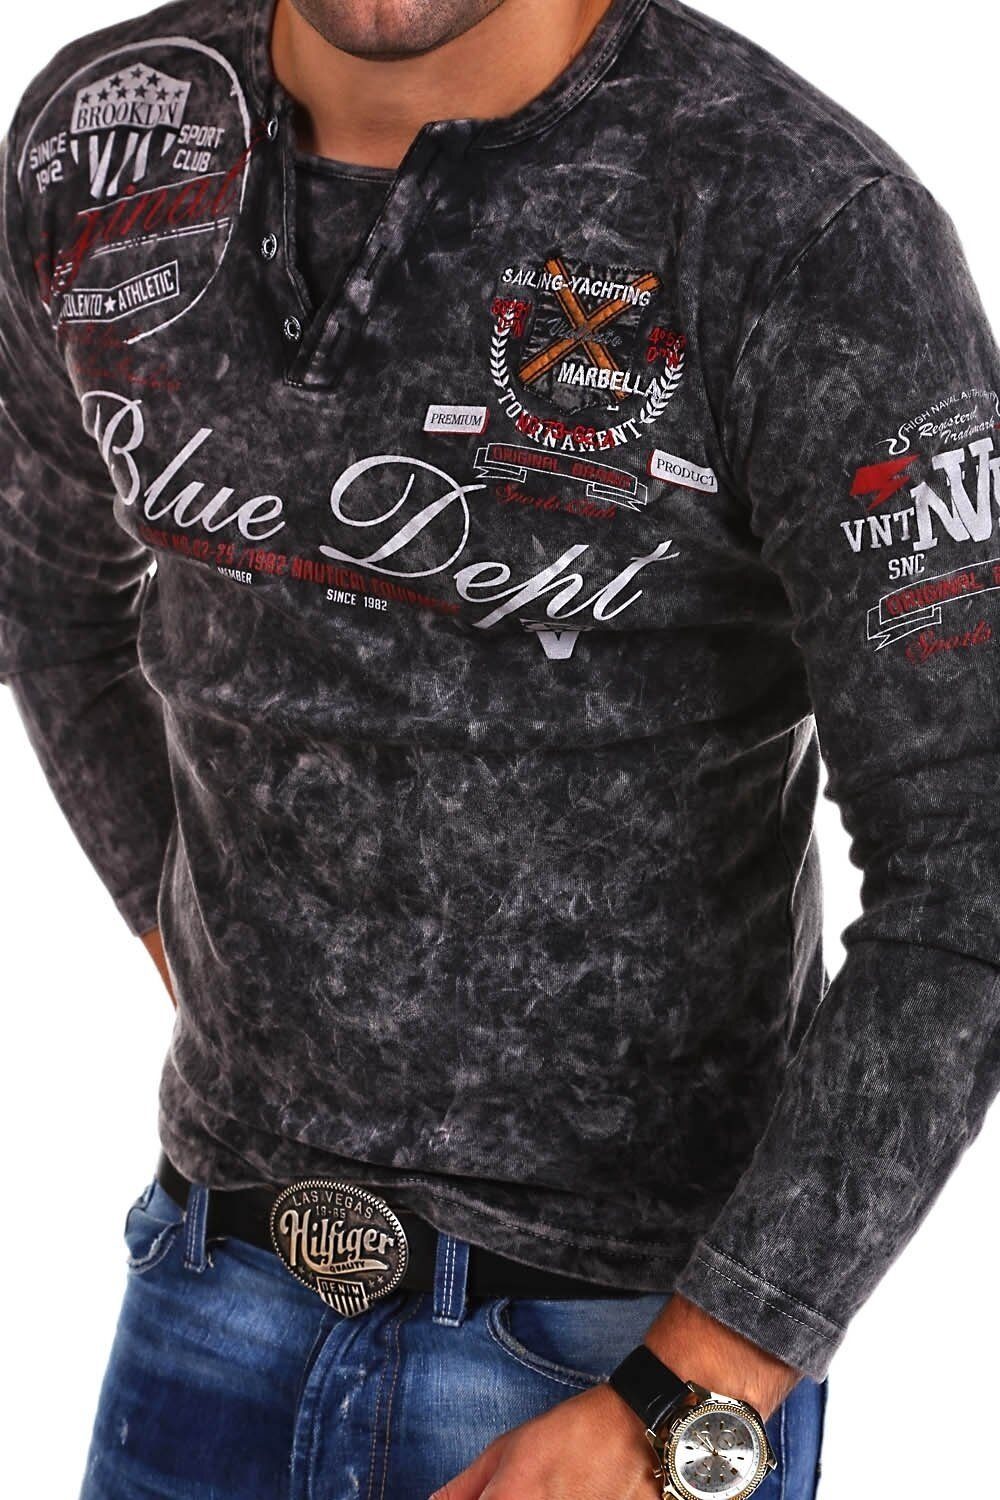 behype Langarmshirt VT-Blue mit ausgefallenem Print schwarz